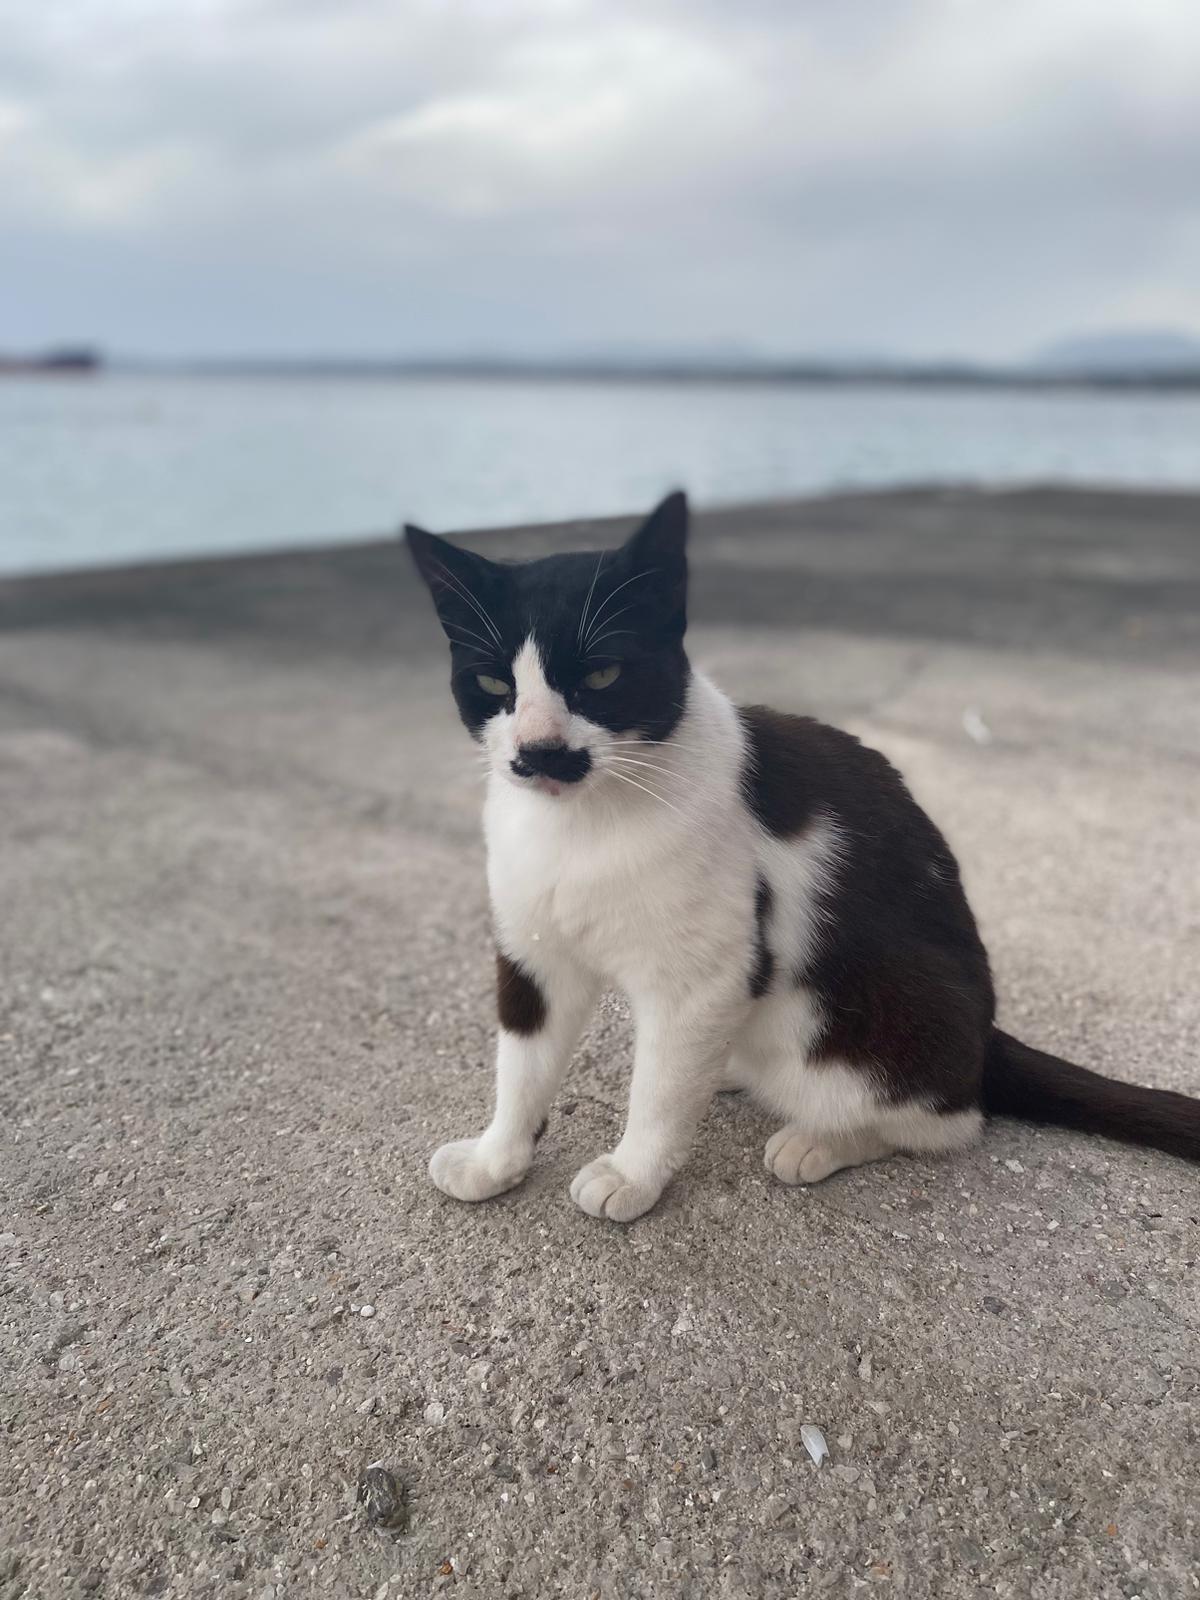 Cat sitting on concrete pier